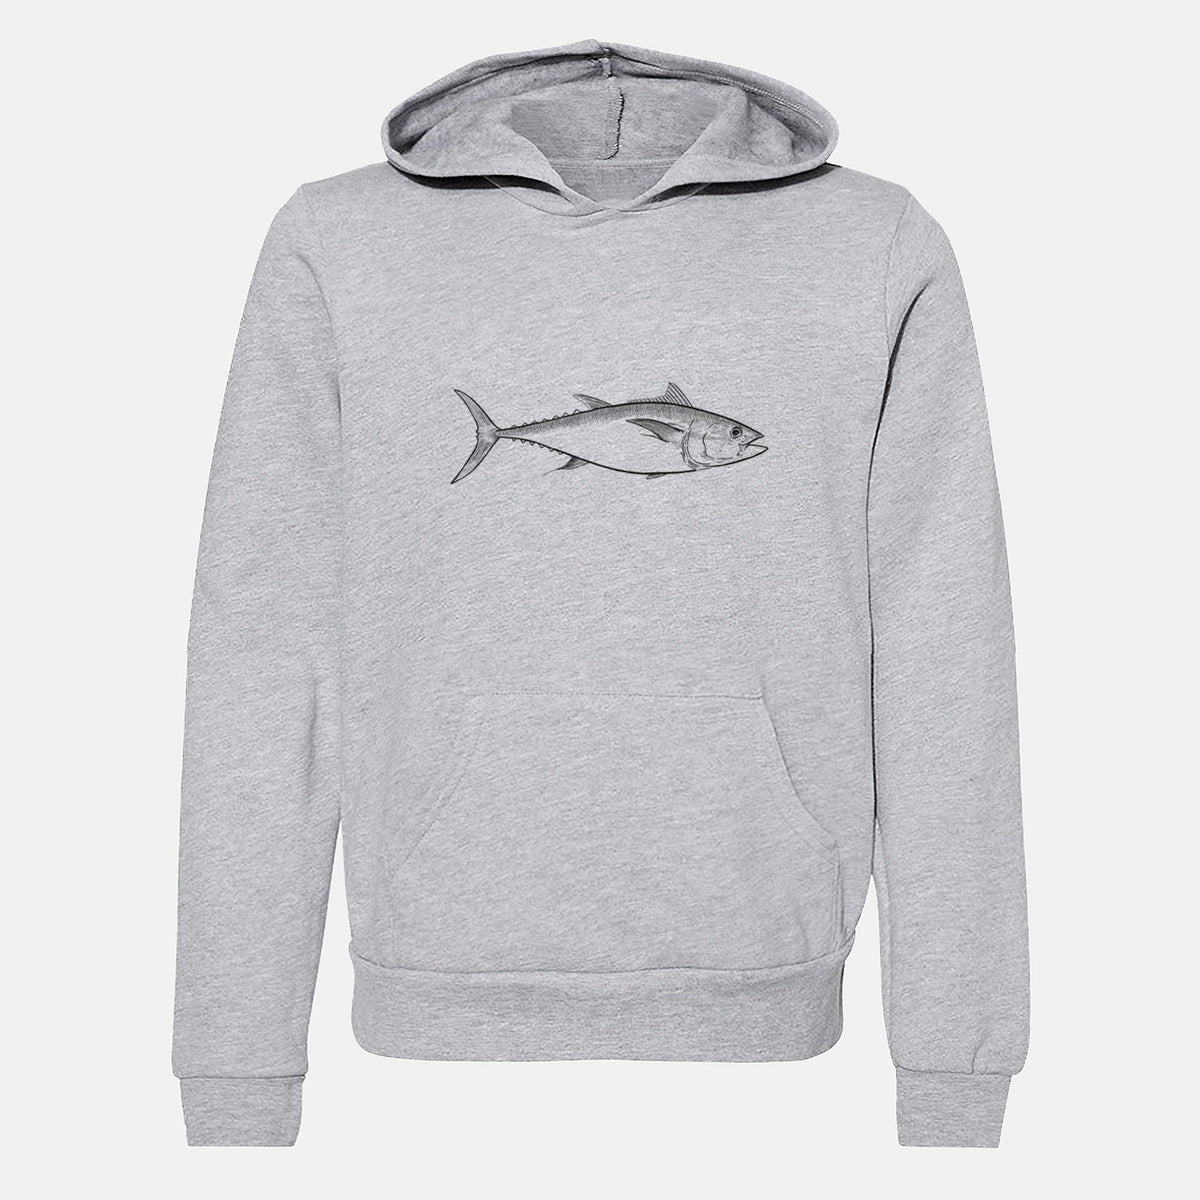 Atlantic Bluefin Tuna - Thunnus thynnus - Youth Hoodie Sweatshirt